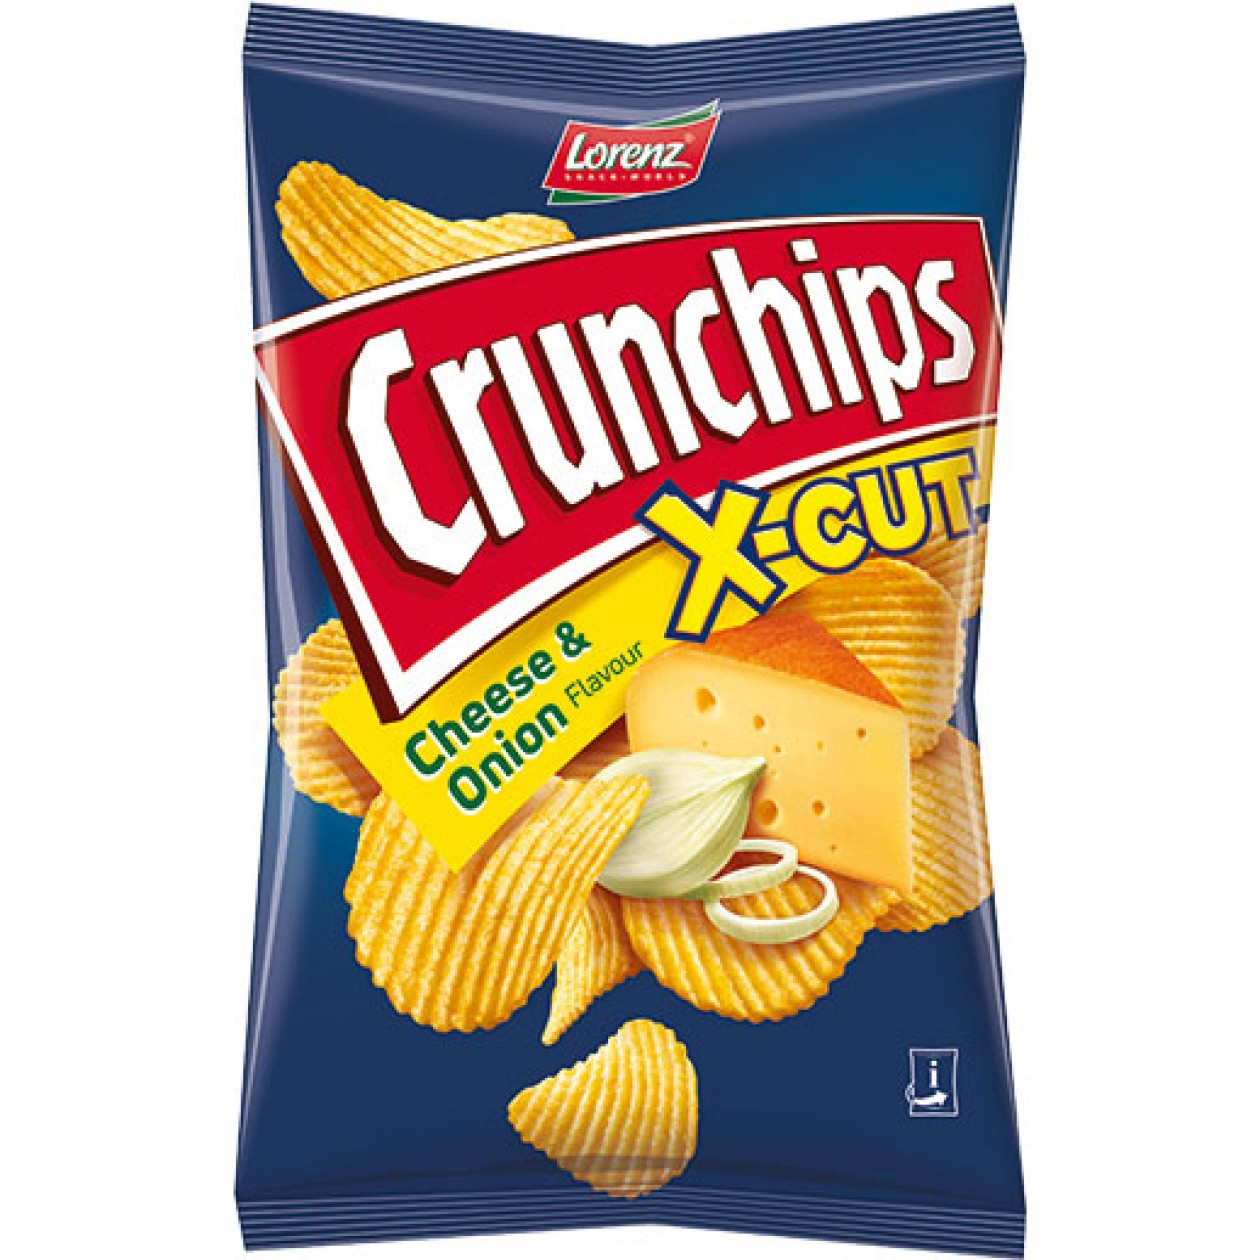 Crisps Crunchips X-Cut Cheese & Onion 10x150g